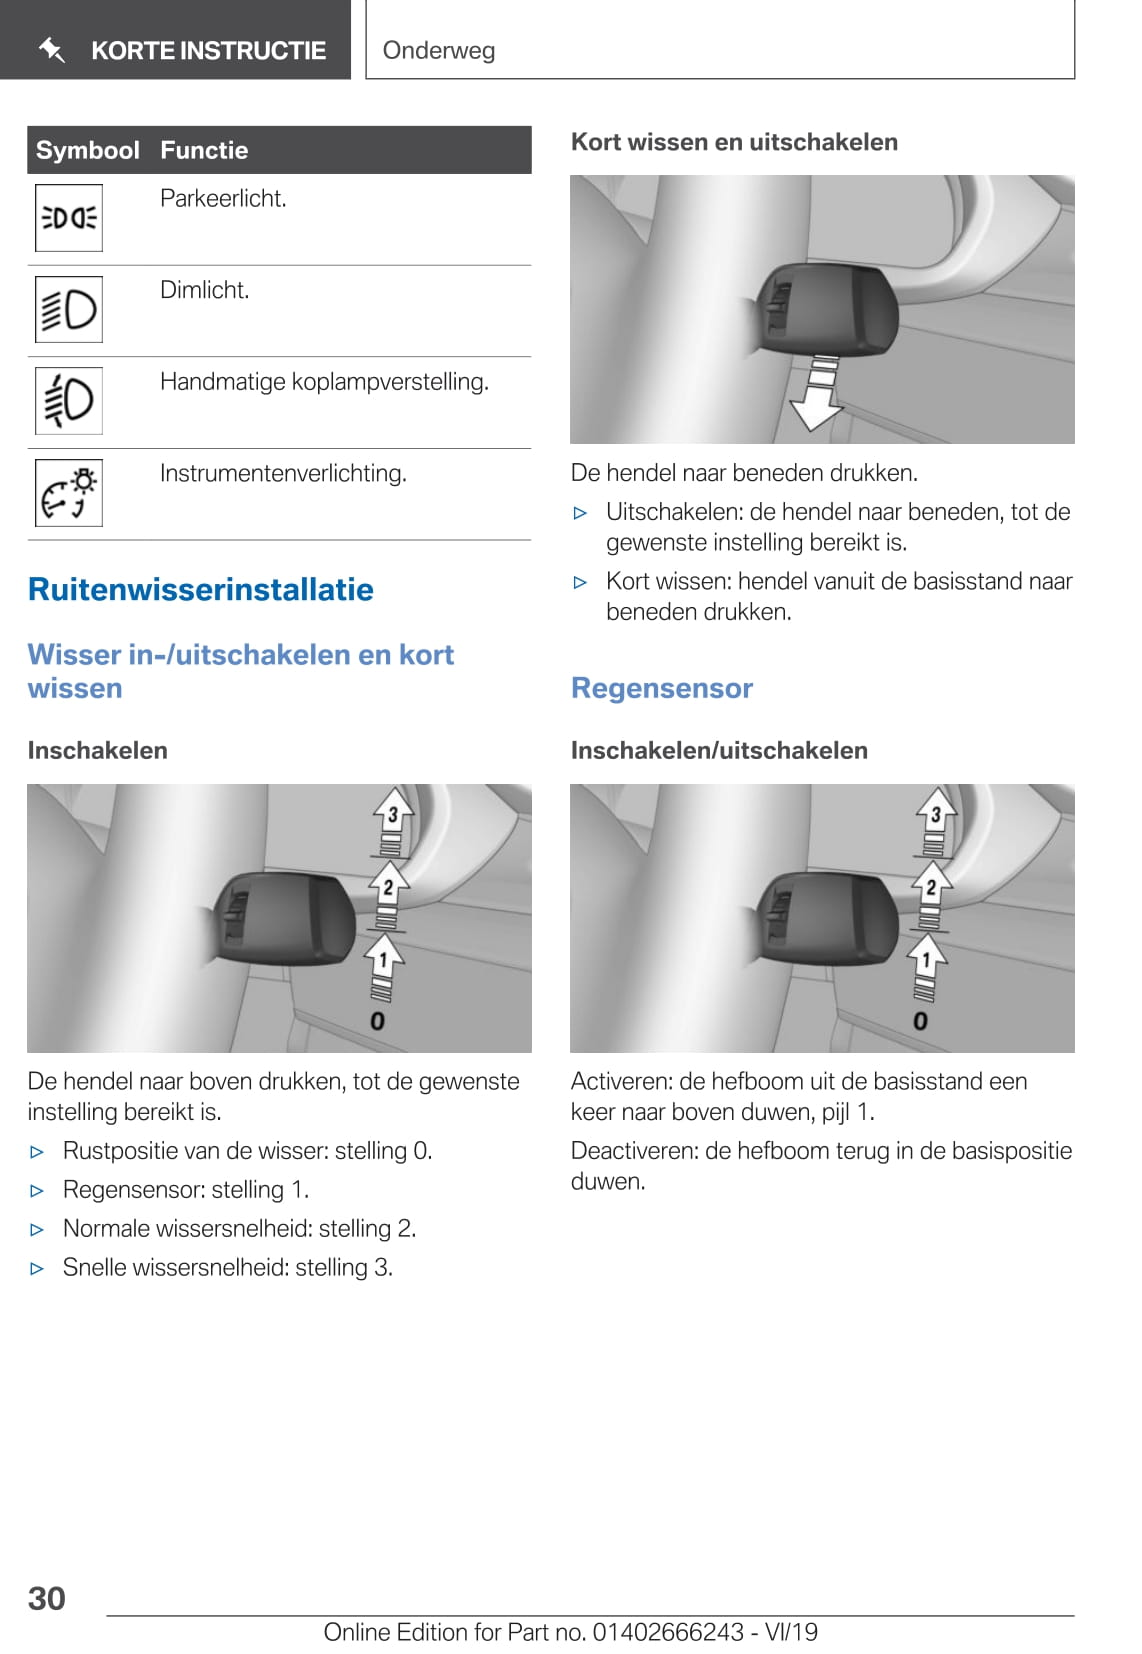 2019 BMW 2 Series Gebruikershandleiding | Nederlands